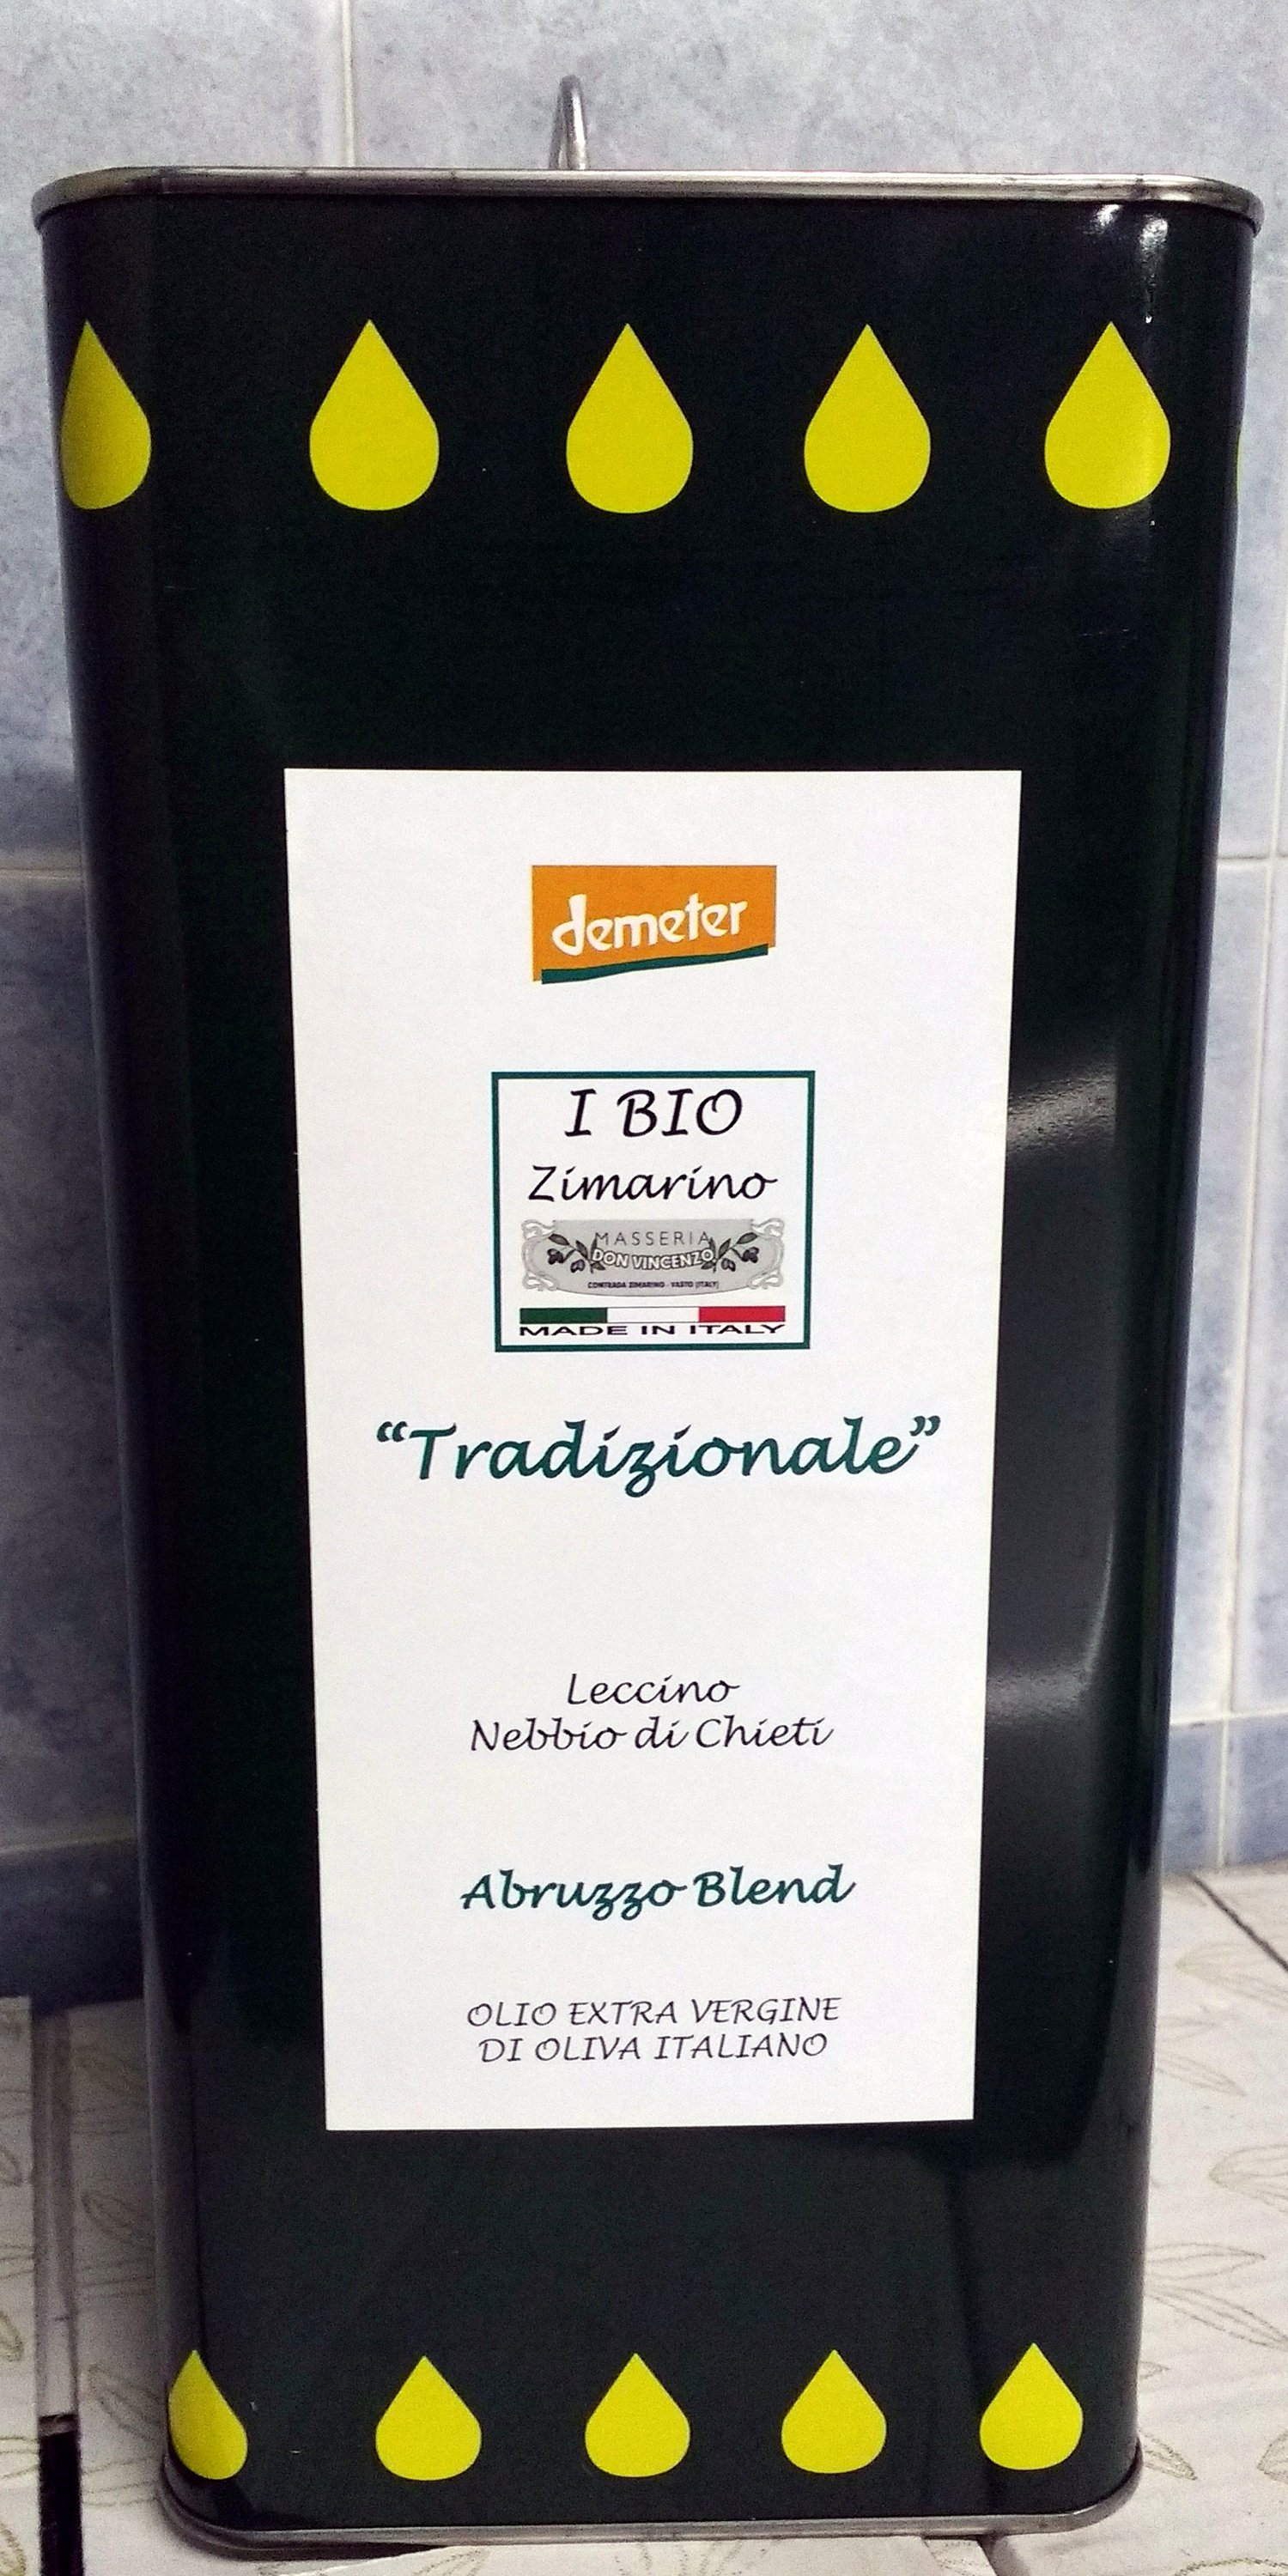 Image of "Tradizionale" Abruzzo blend - Organic and Biodynamic Demeter